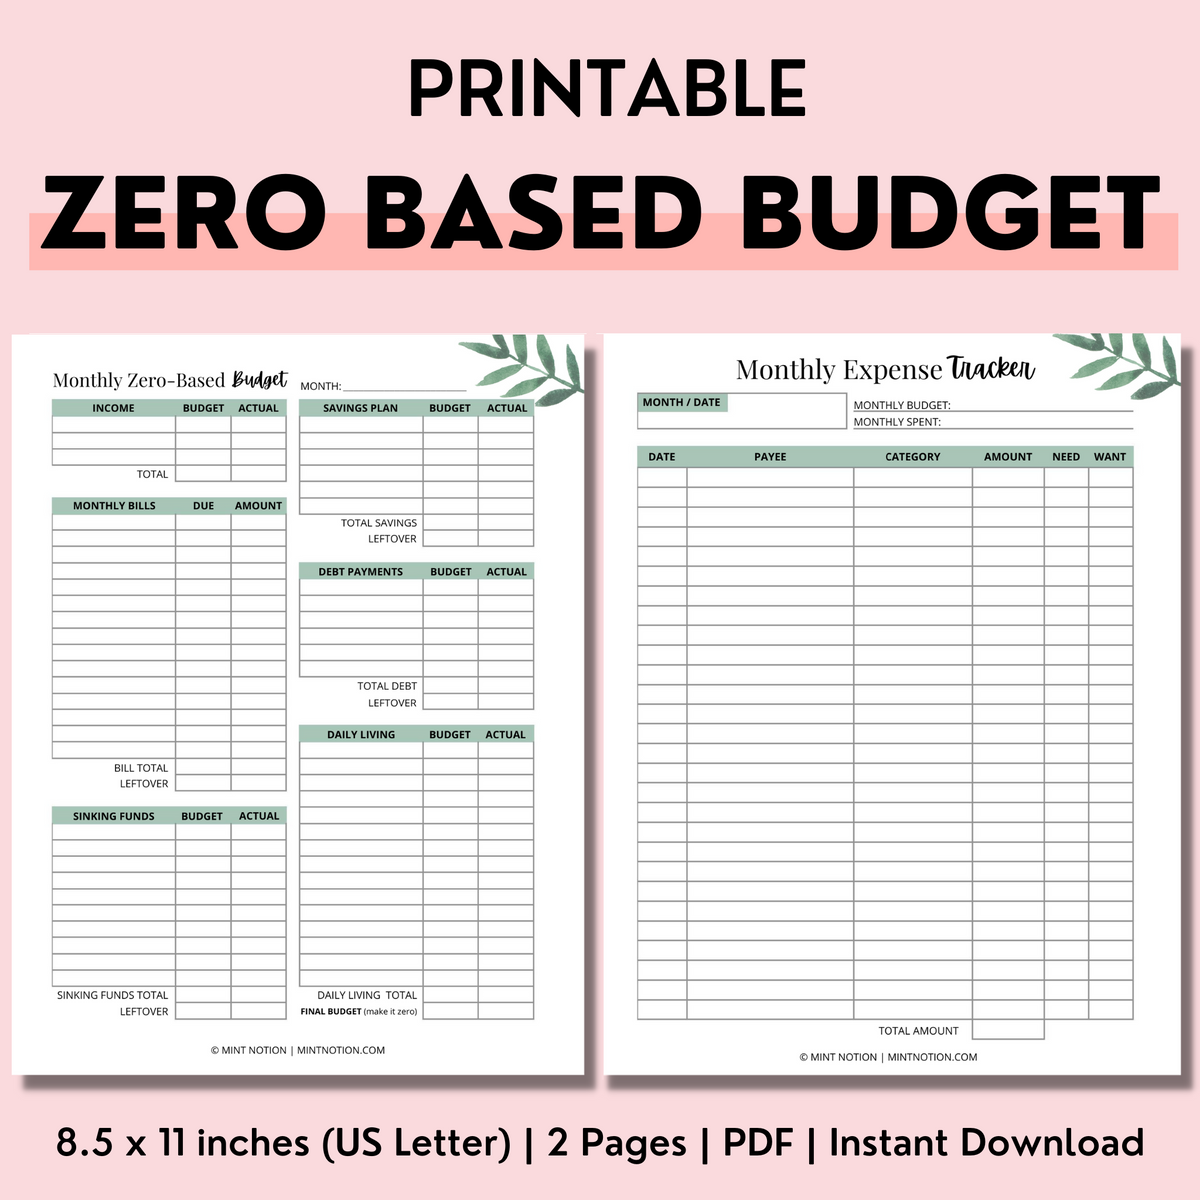 zero-based-budget-printable-mint-notion-shop